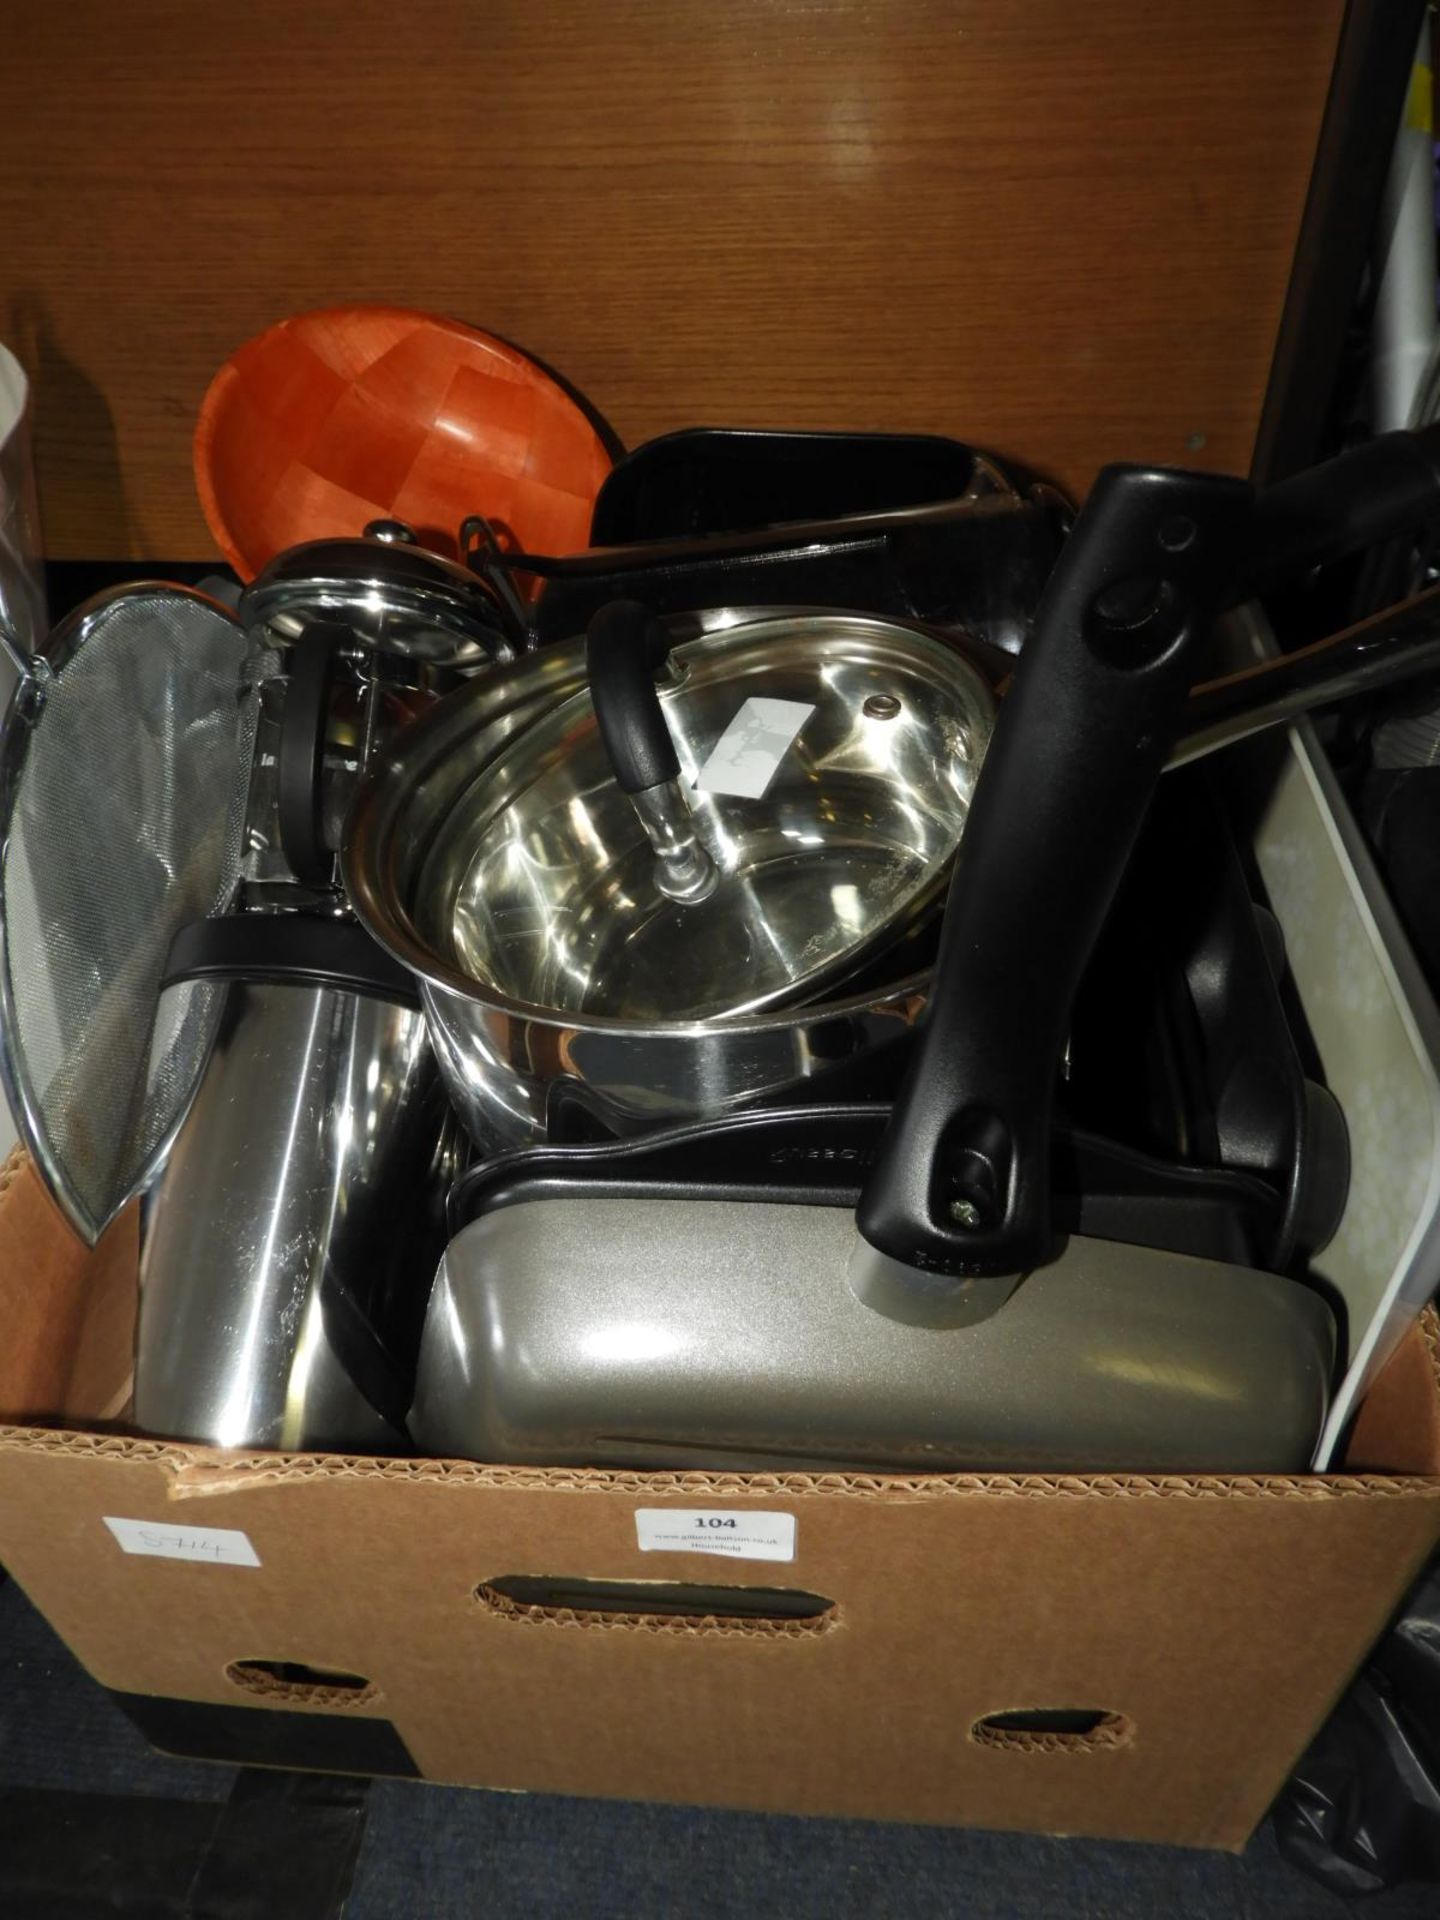 Kitchenware; Stainless Steel Pans, Blender, etc.